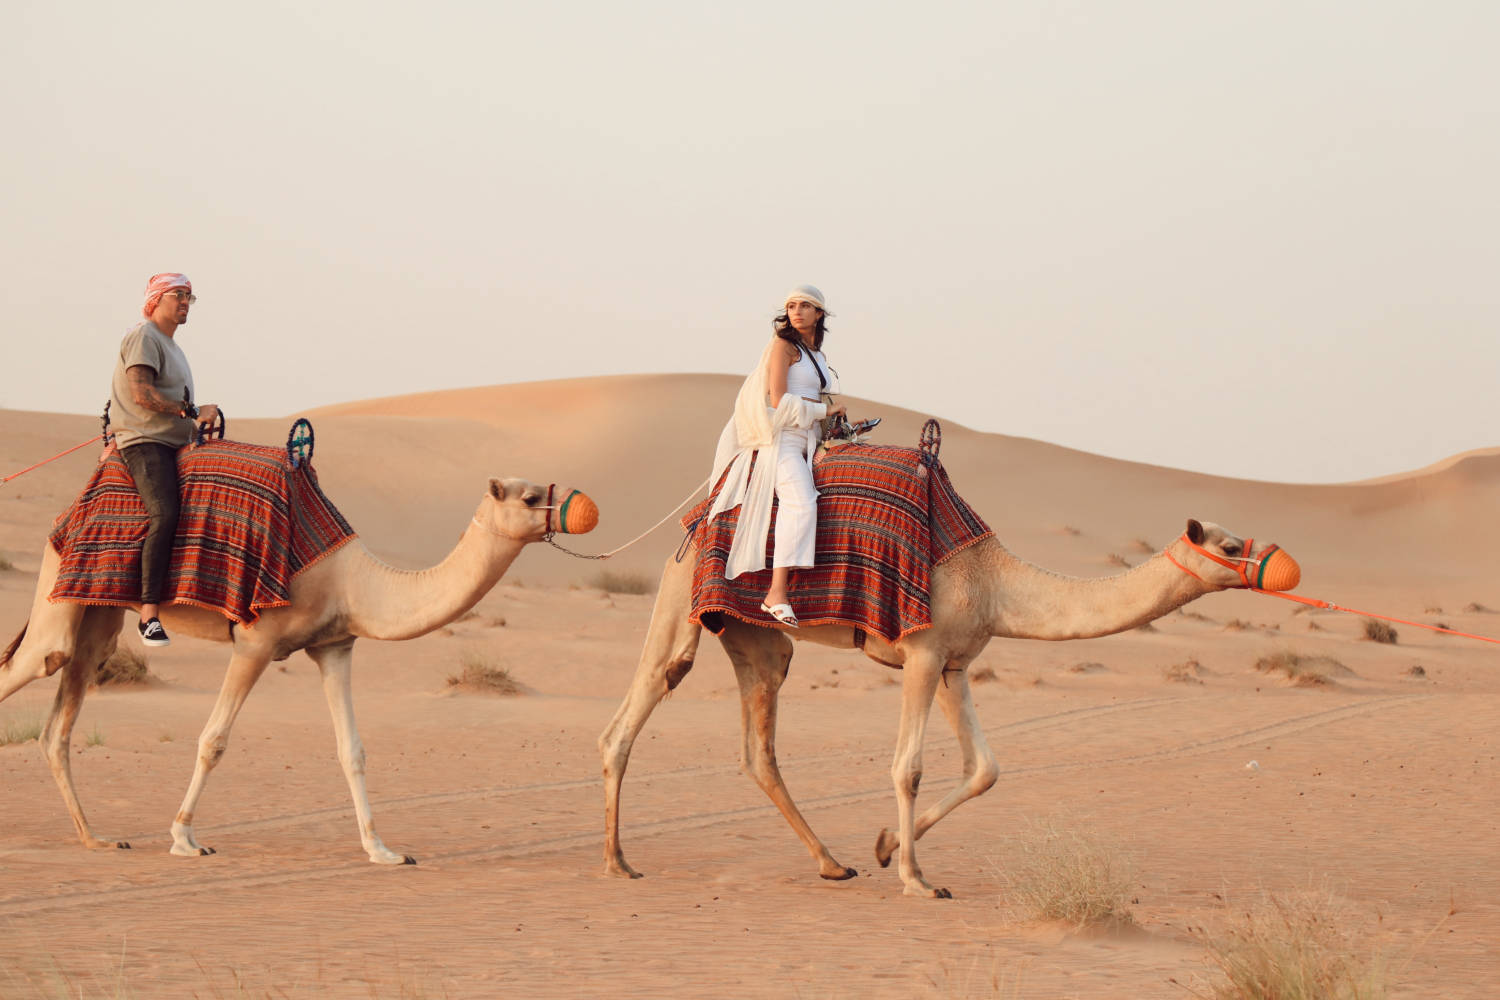 I Found The Most Ethical, Luxurious & Best Desert Safari in Dubai